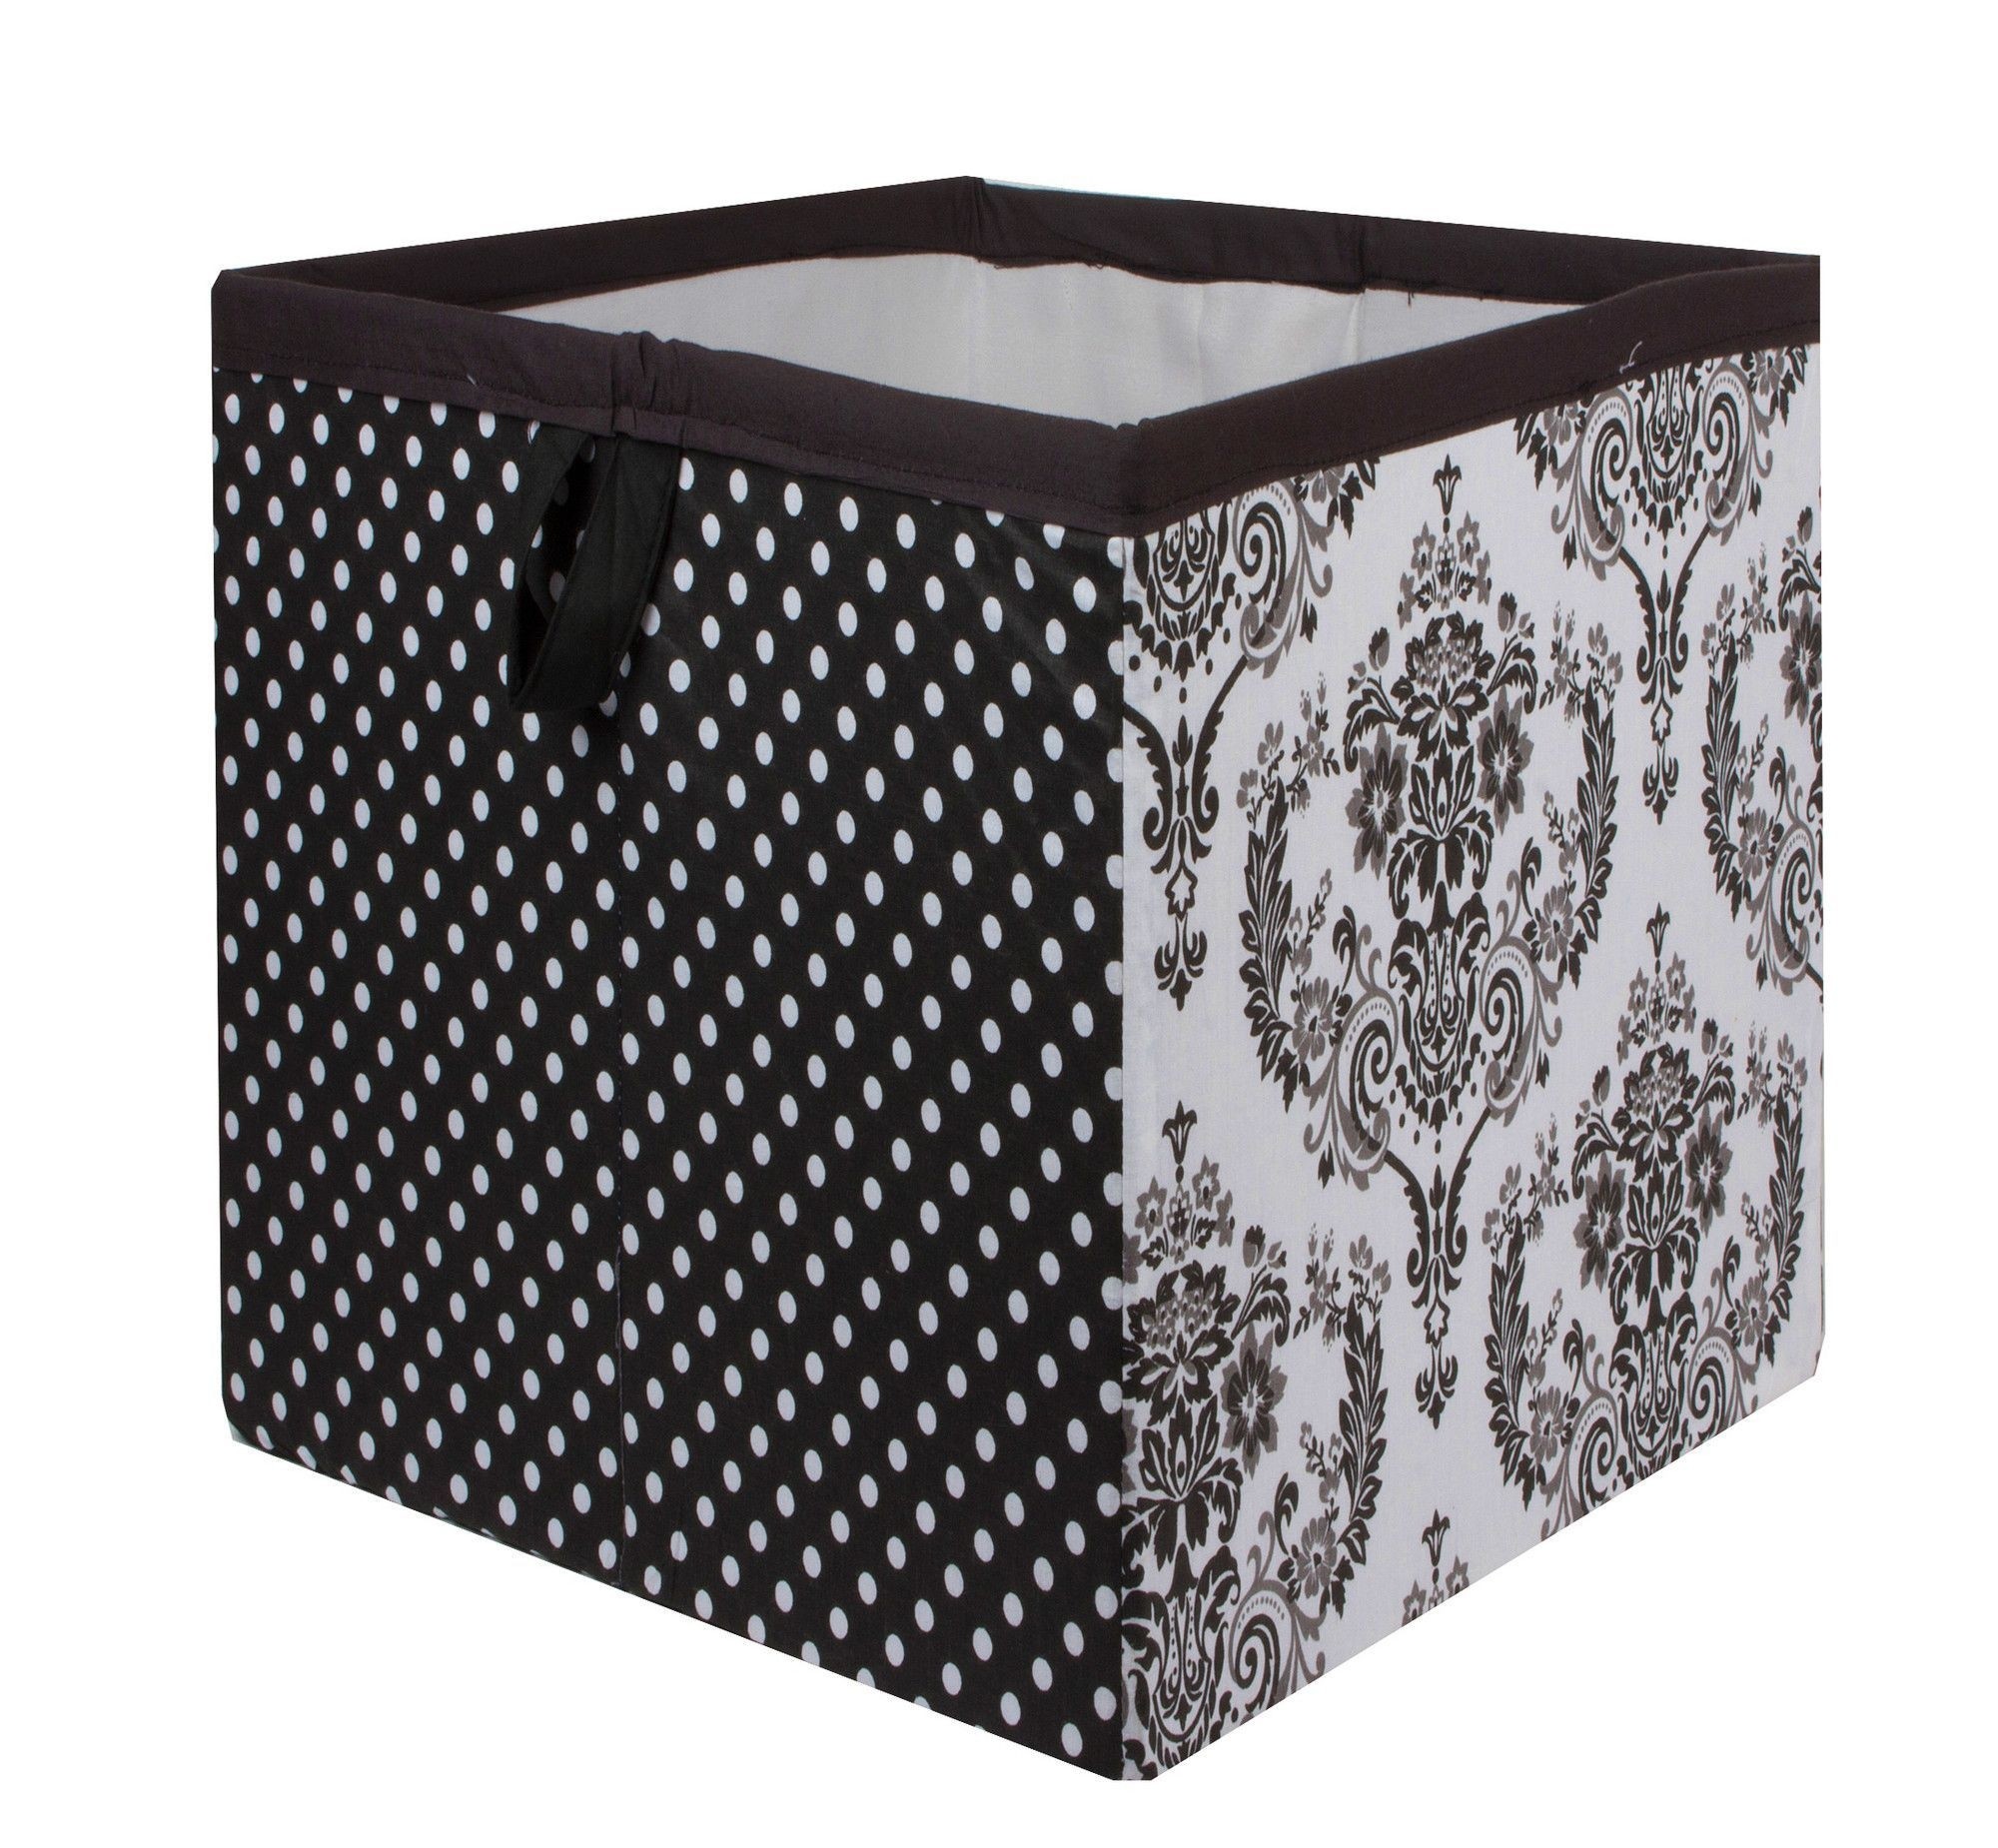 Michela classic storage fabric box fabric boxes fabric